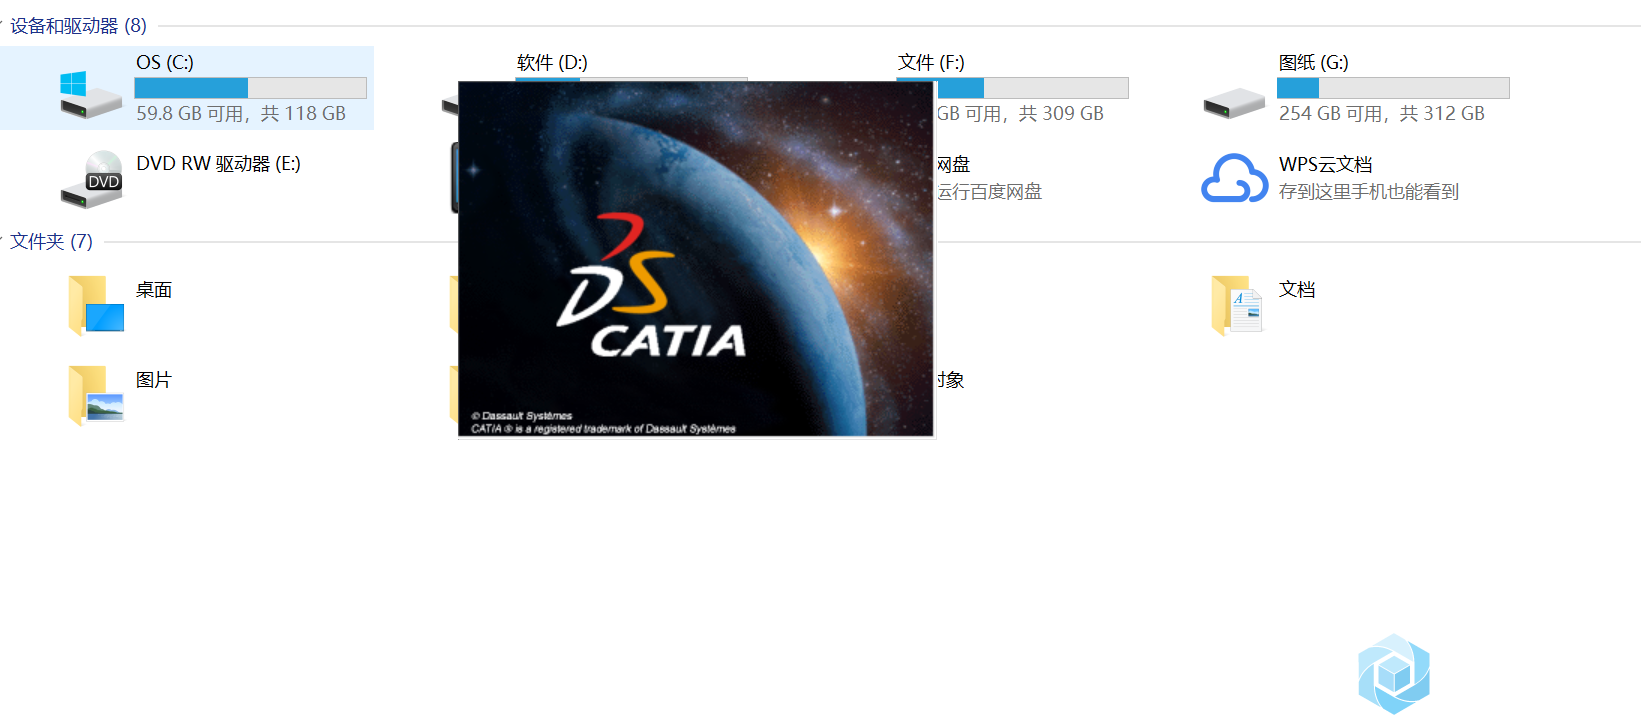 CATIA2017显示分辨率偏大,图像显示不够清晰